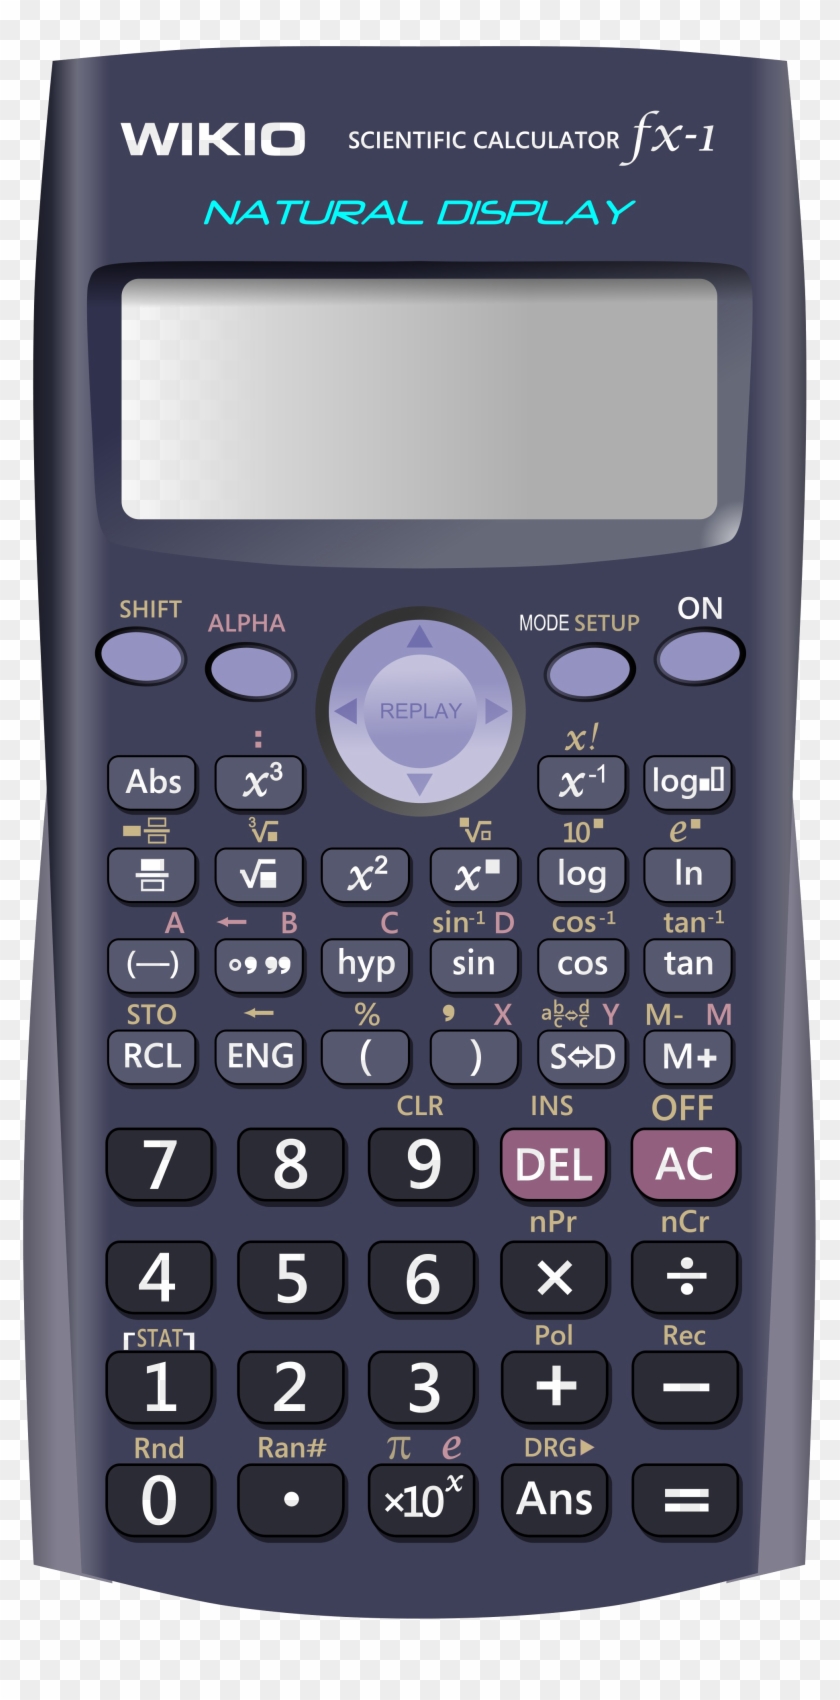 Calculator Png Free Image Download - Calculadora Casio Fx 82es Clipart #1149116